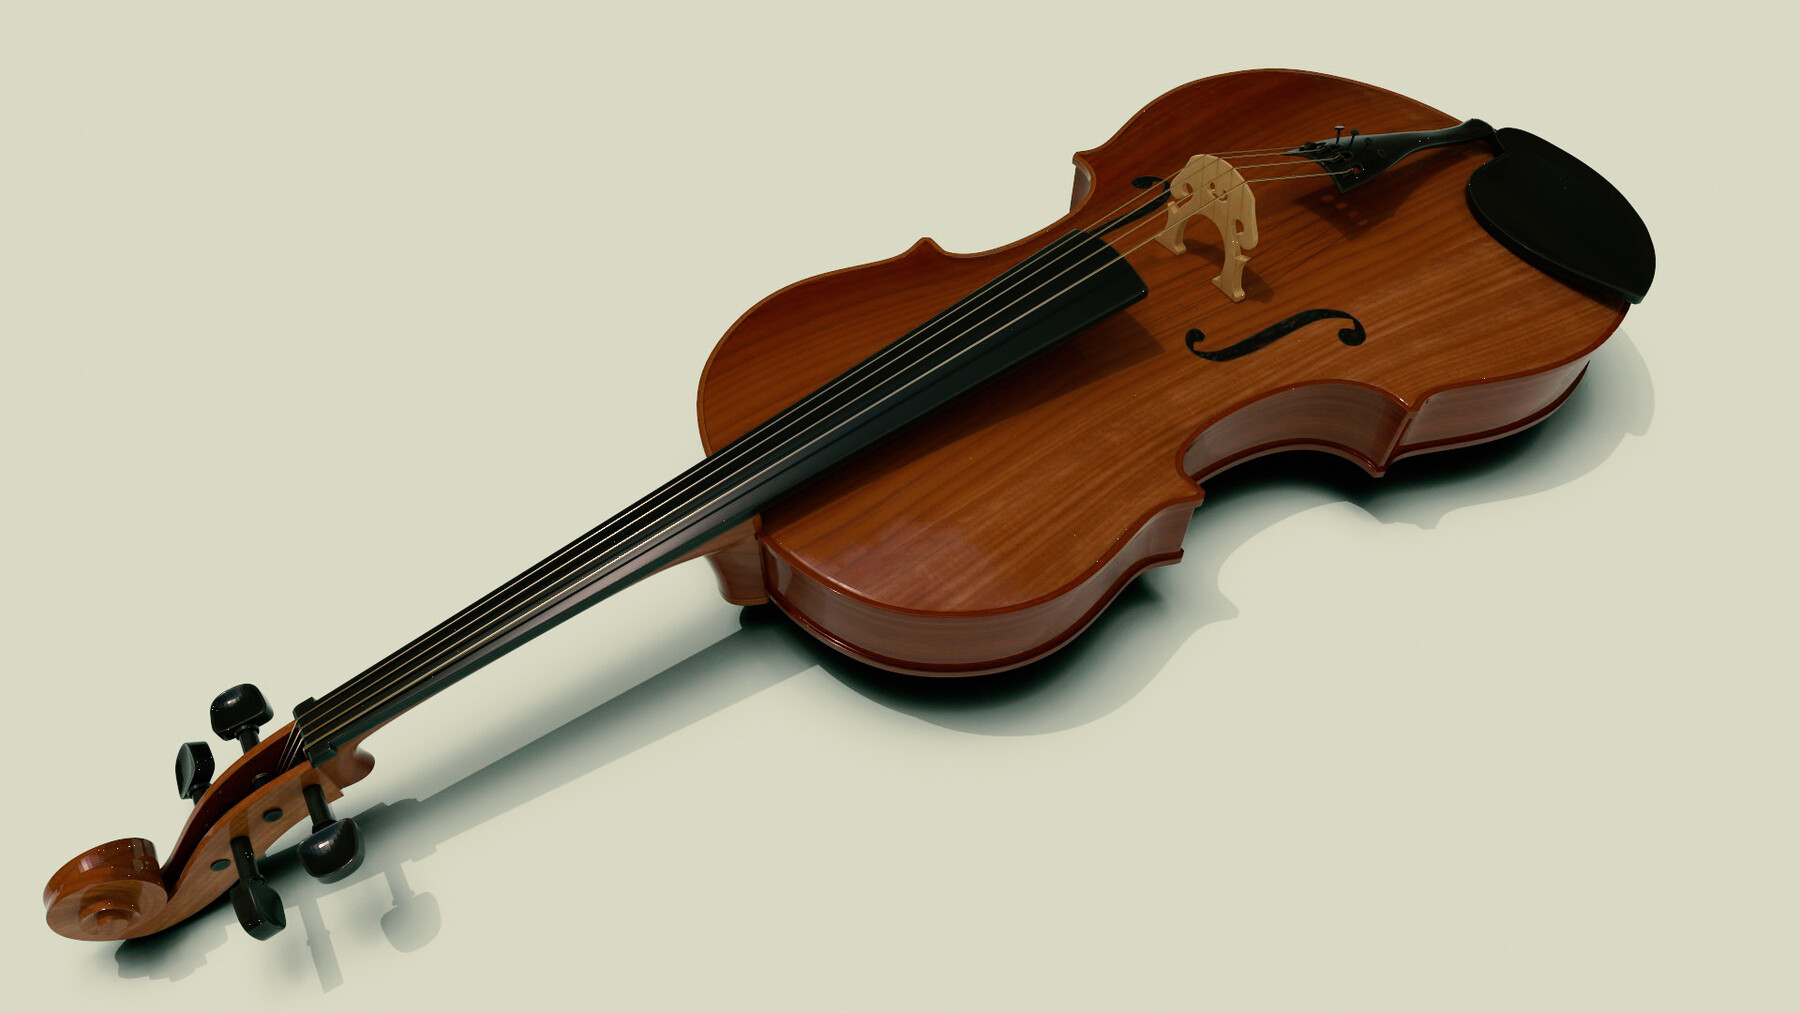 Violin instruments. Макет скрипки.